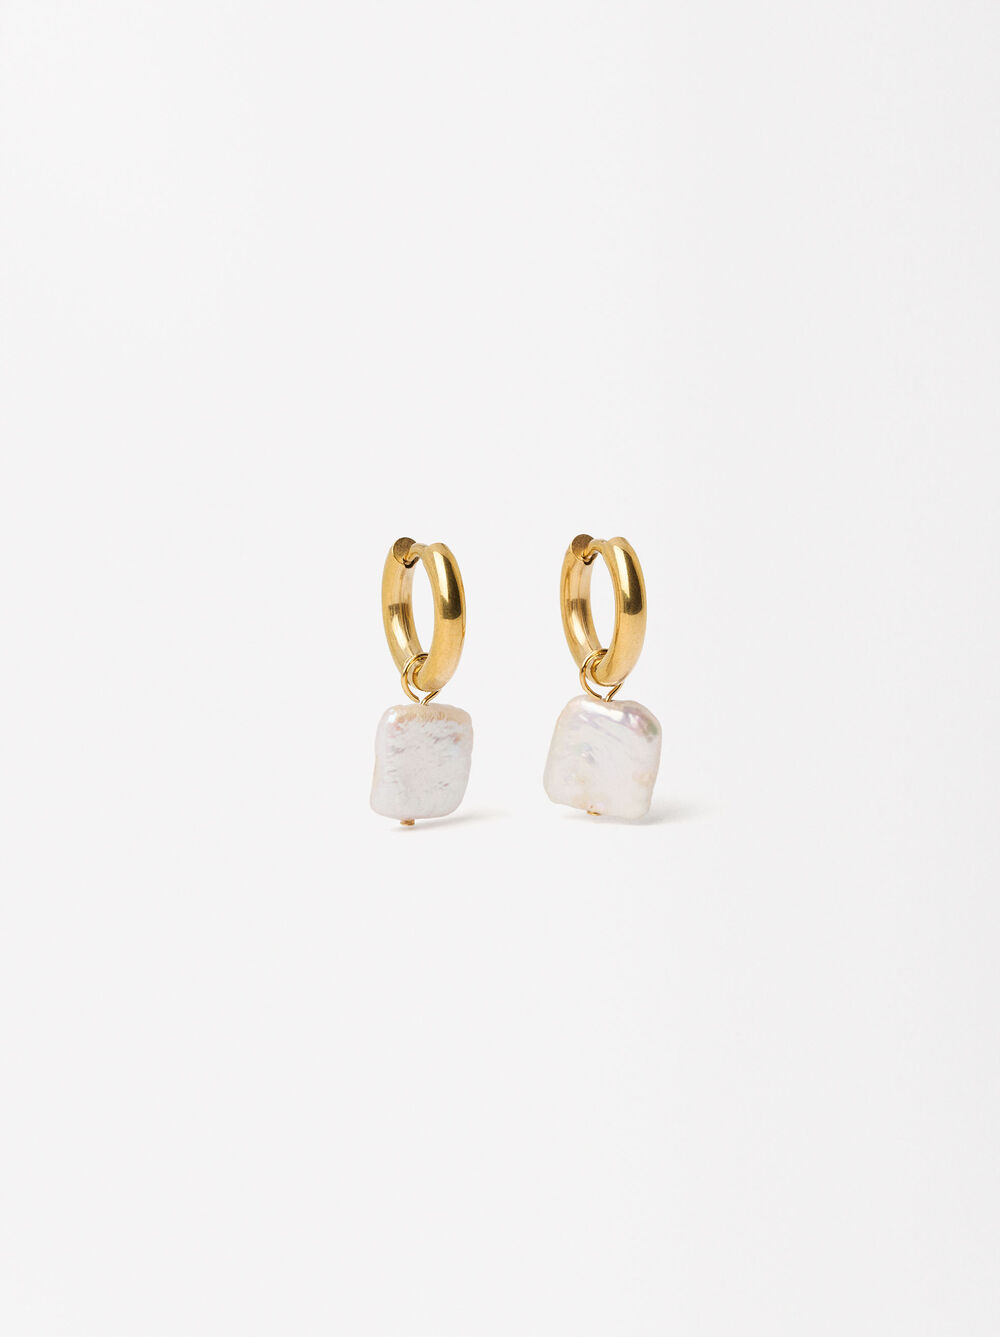 Hoops Earrings With Pearls - Stainless Steel  image number 1.0